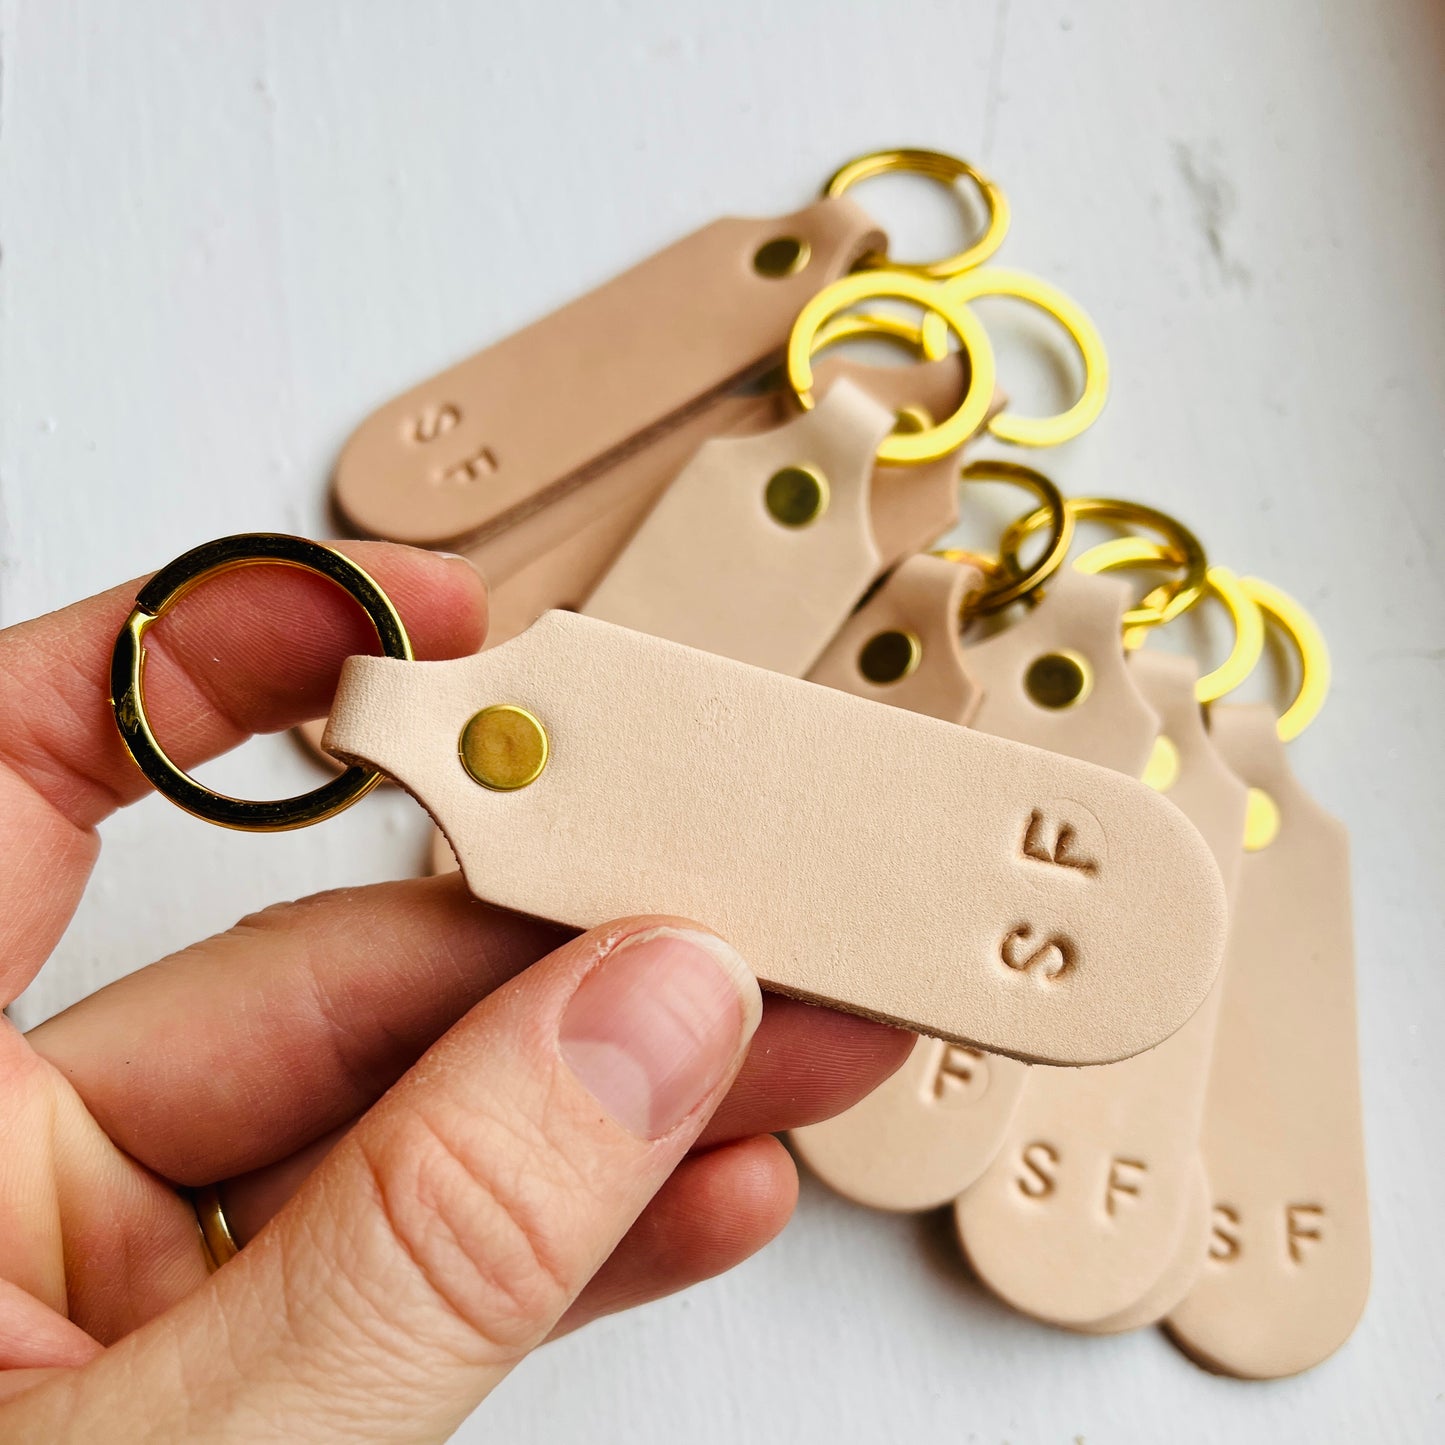 Leather keychain